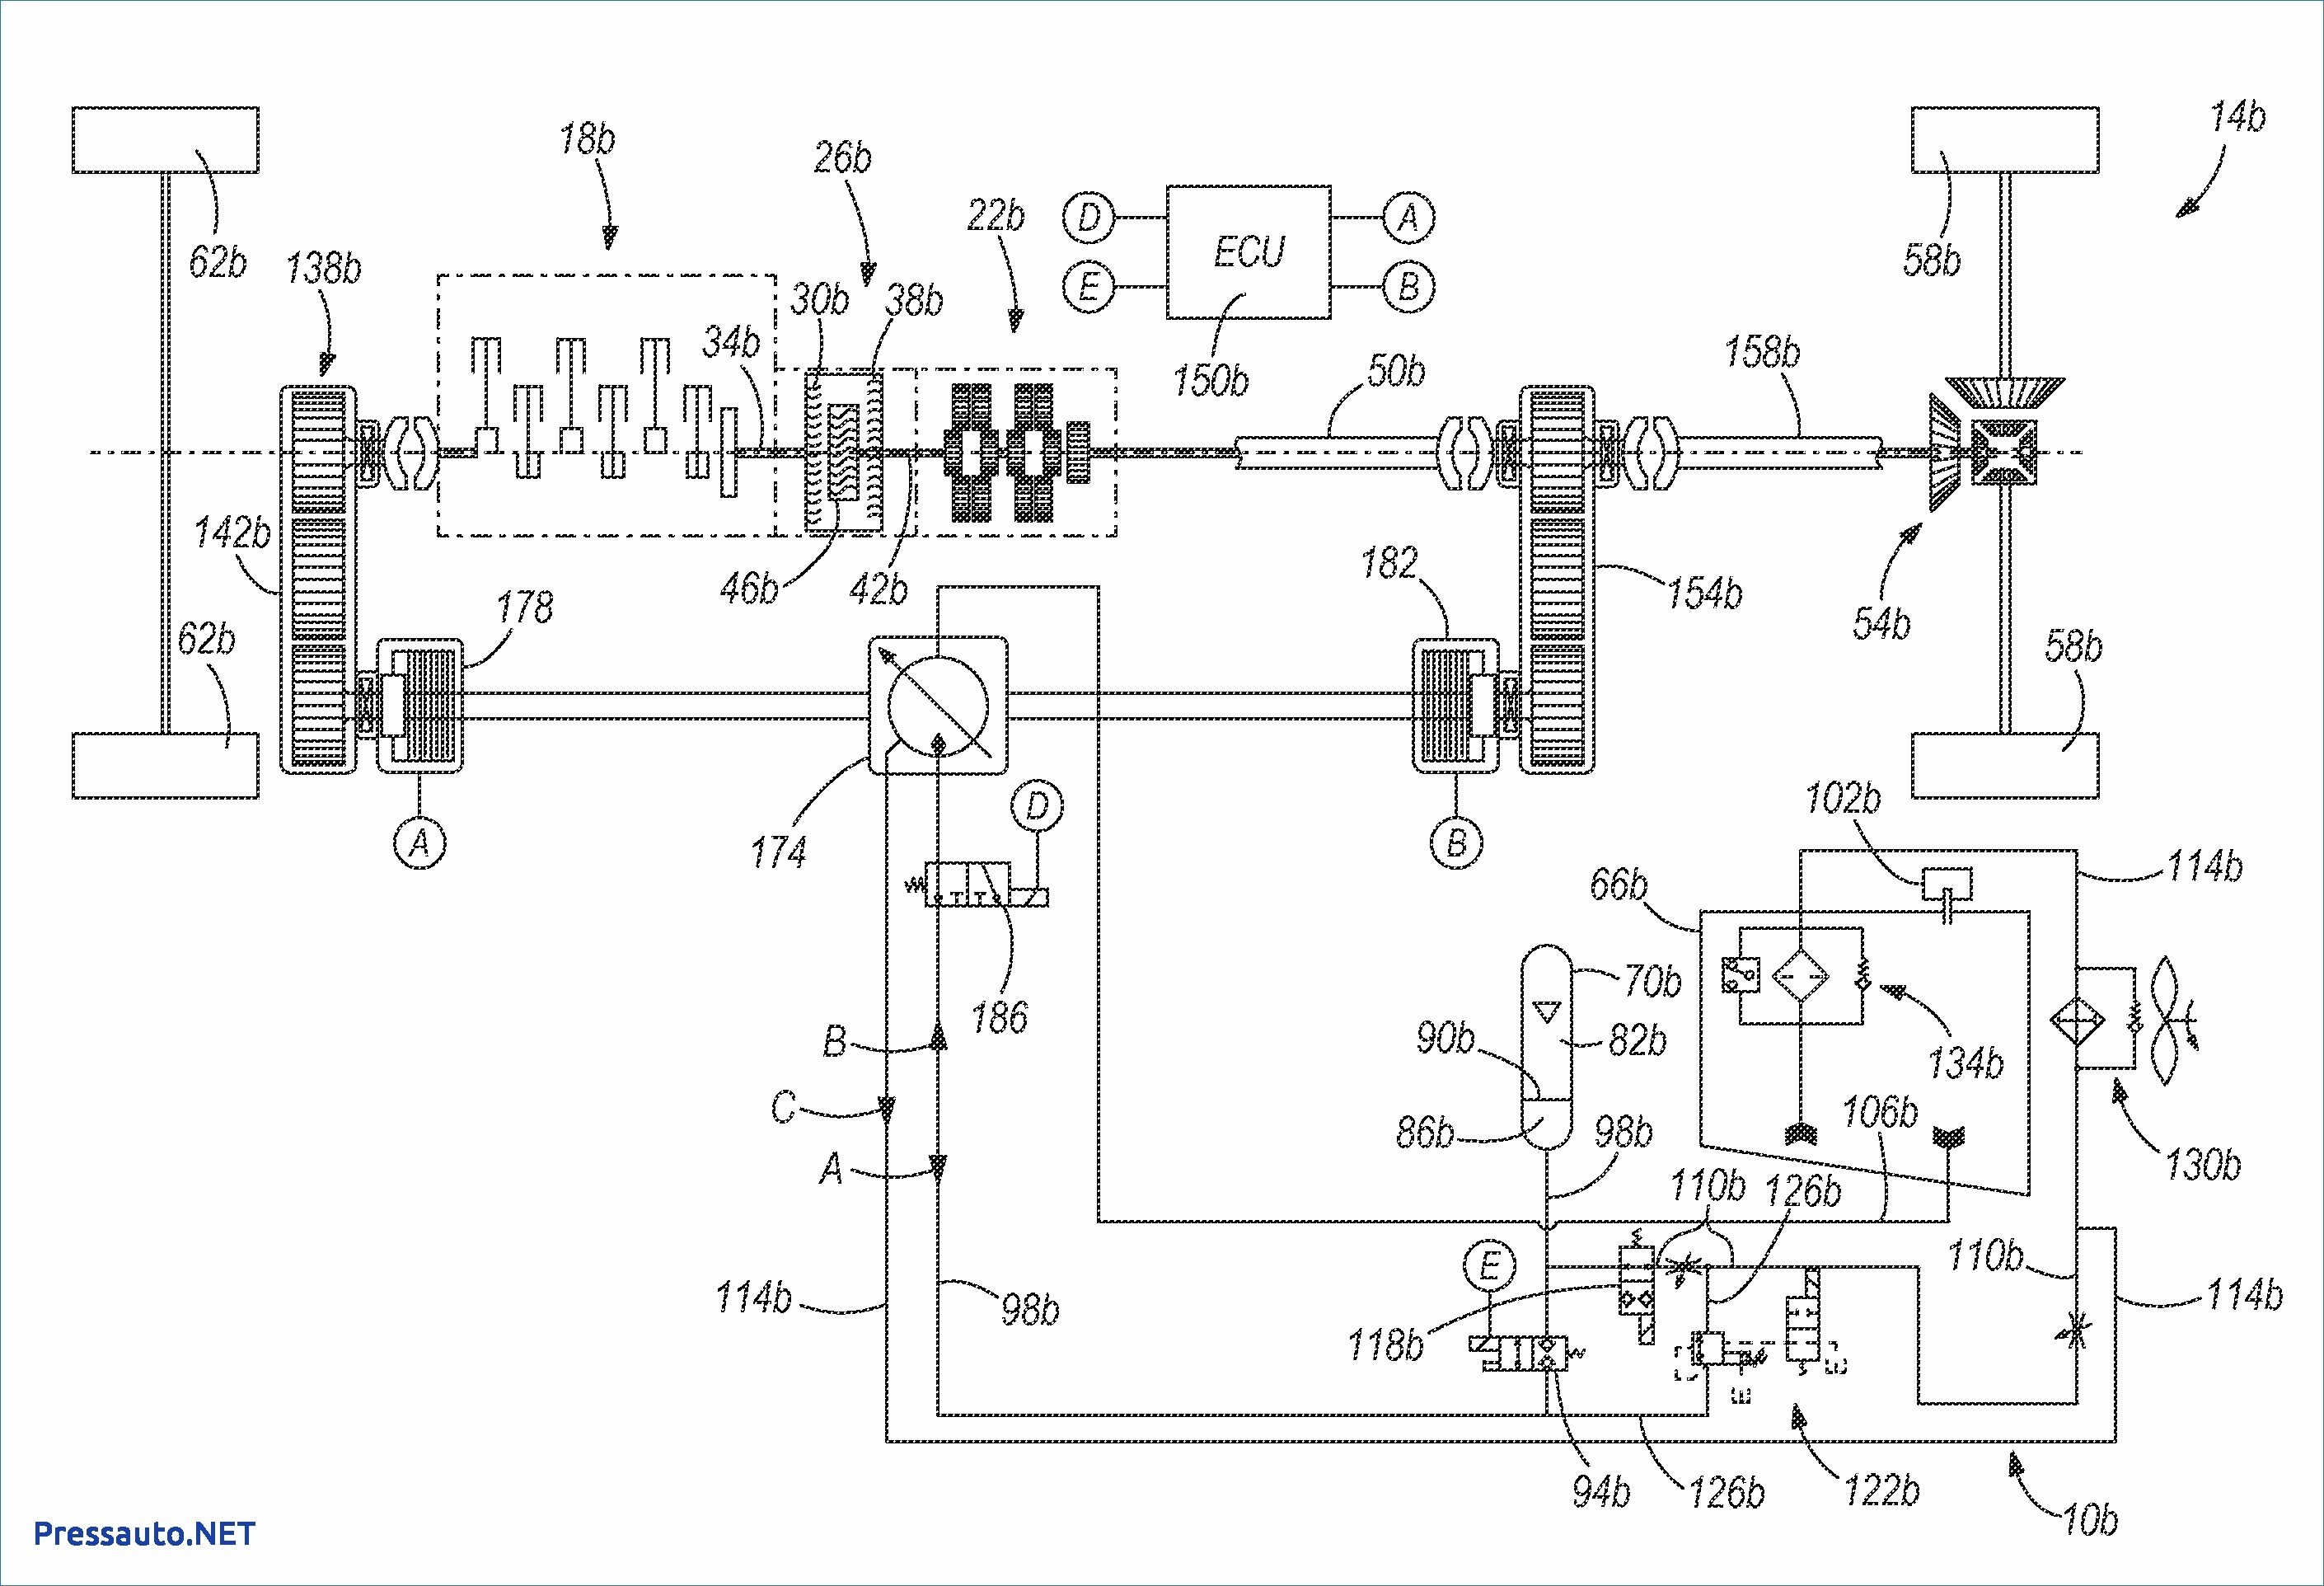 ci motorhome wiring diagram new fleetwood motorhome wiring diagram of fleetwood motorhome wiring diagram